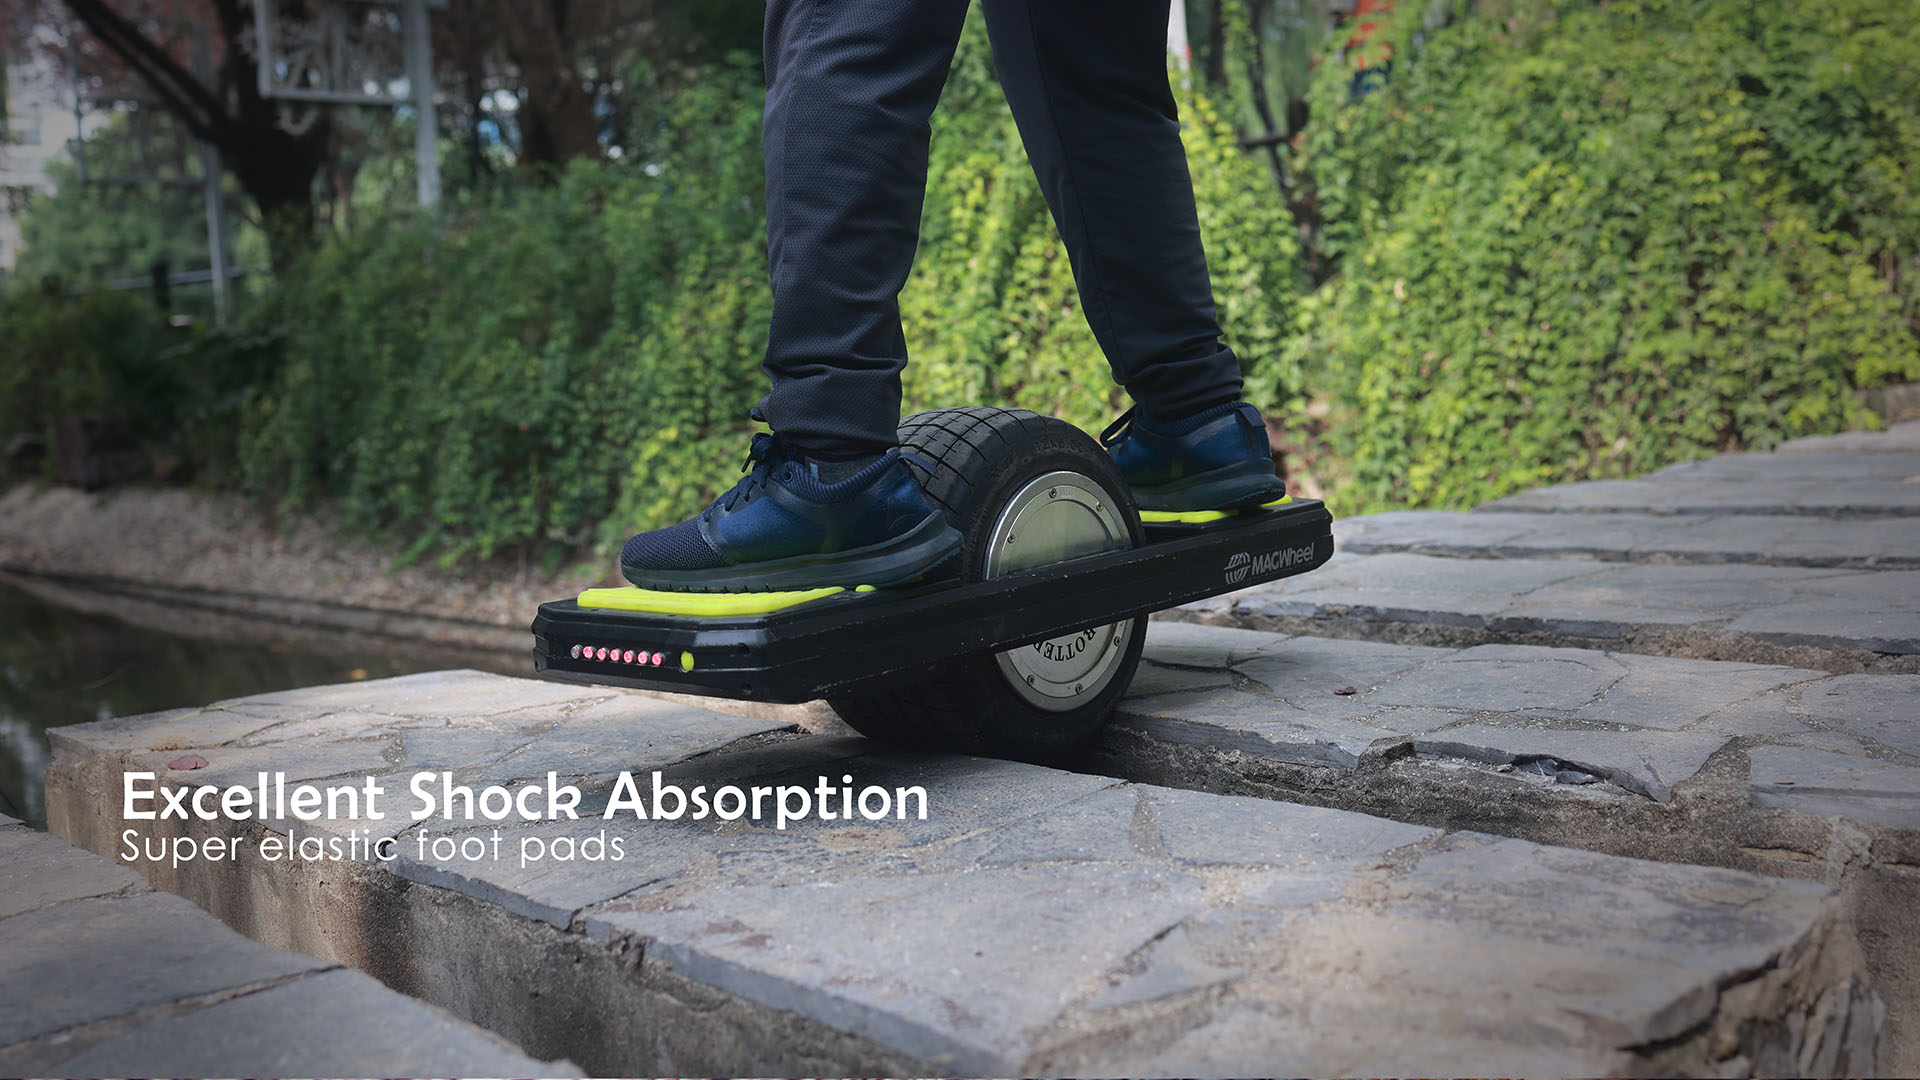 Excellent-Shock-Absorption-Super-elastic-foot-pads